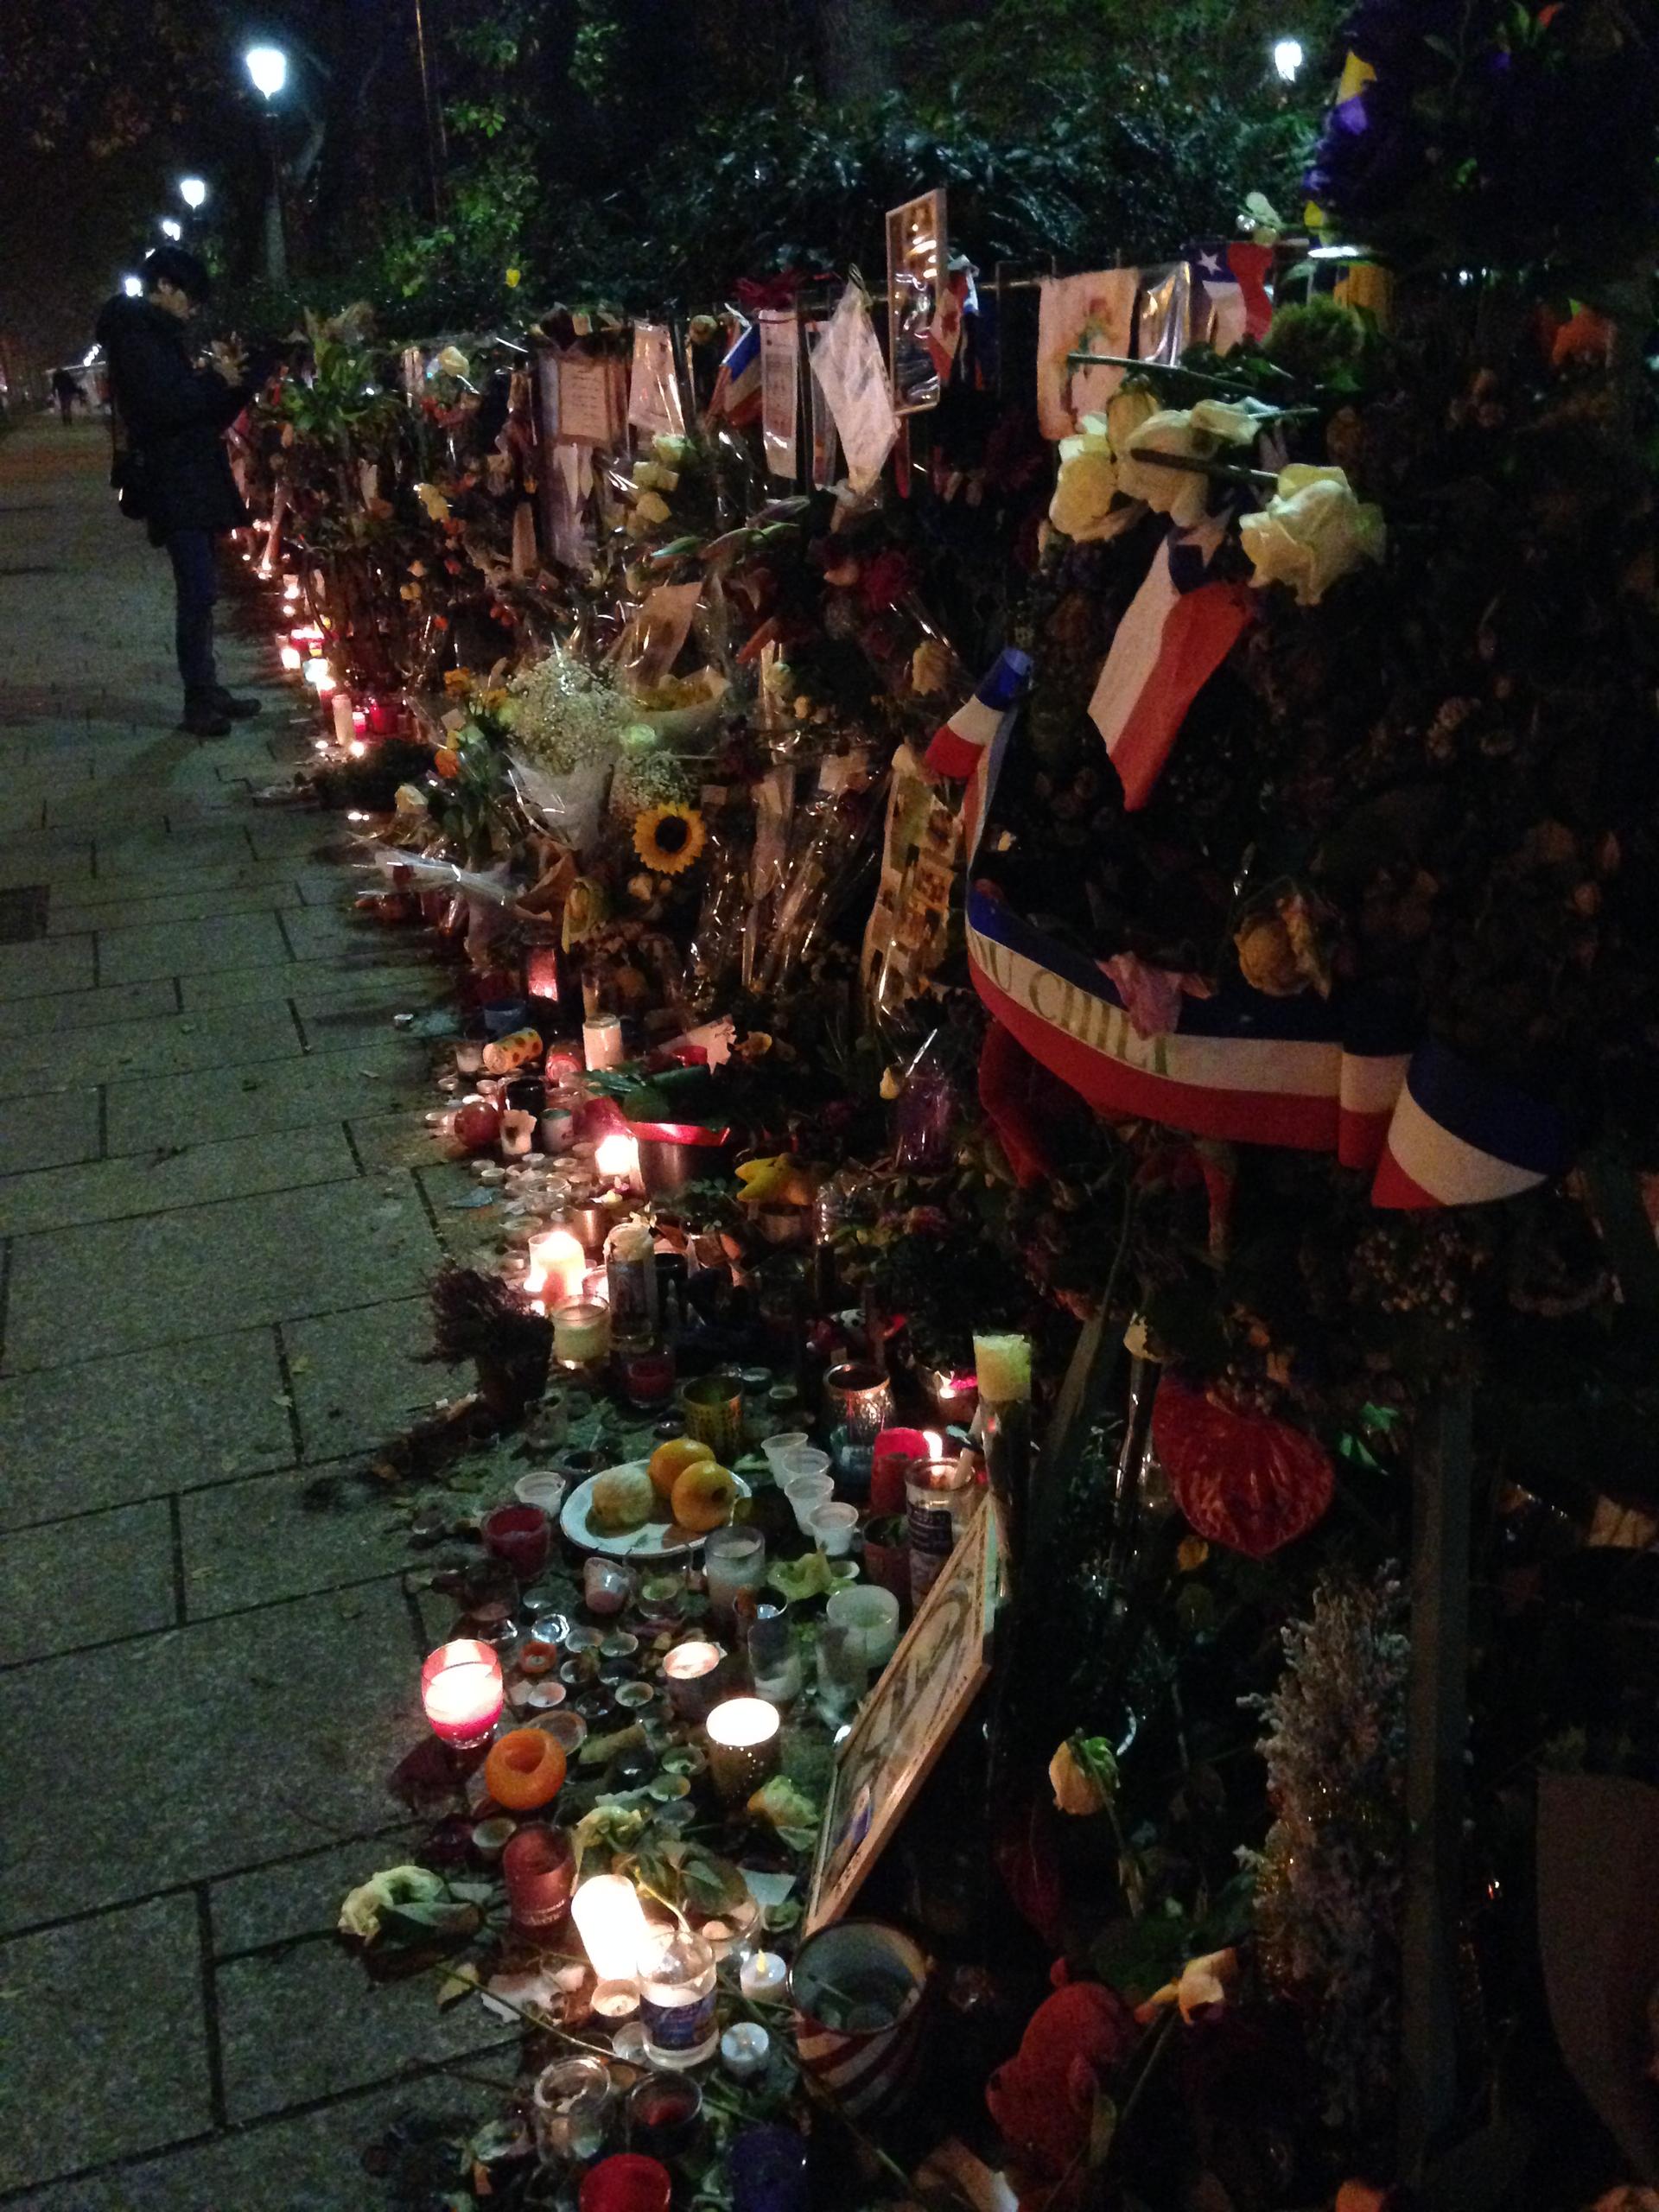 The scene outside the Bataclan in December 2015